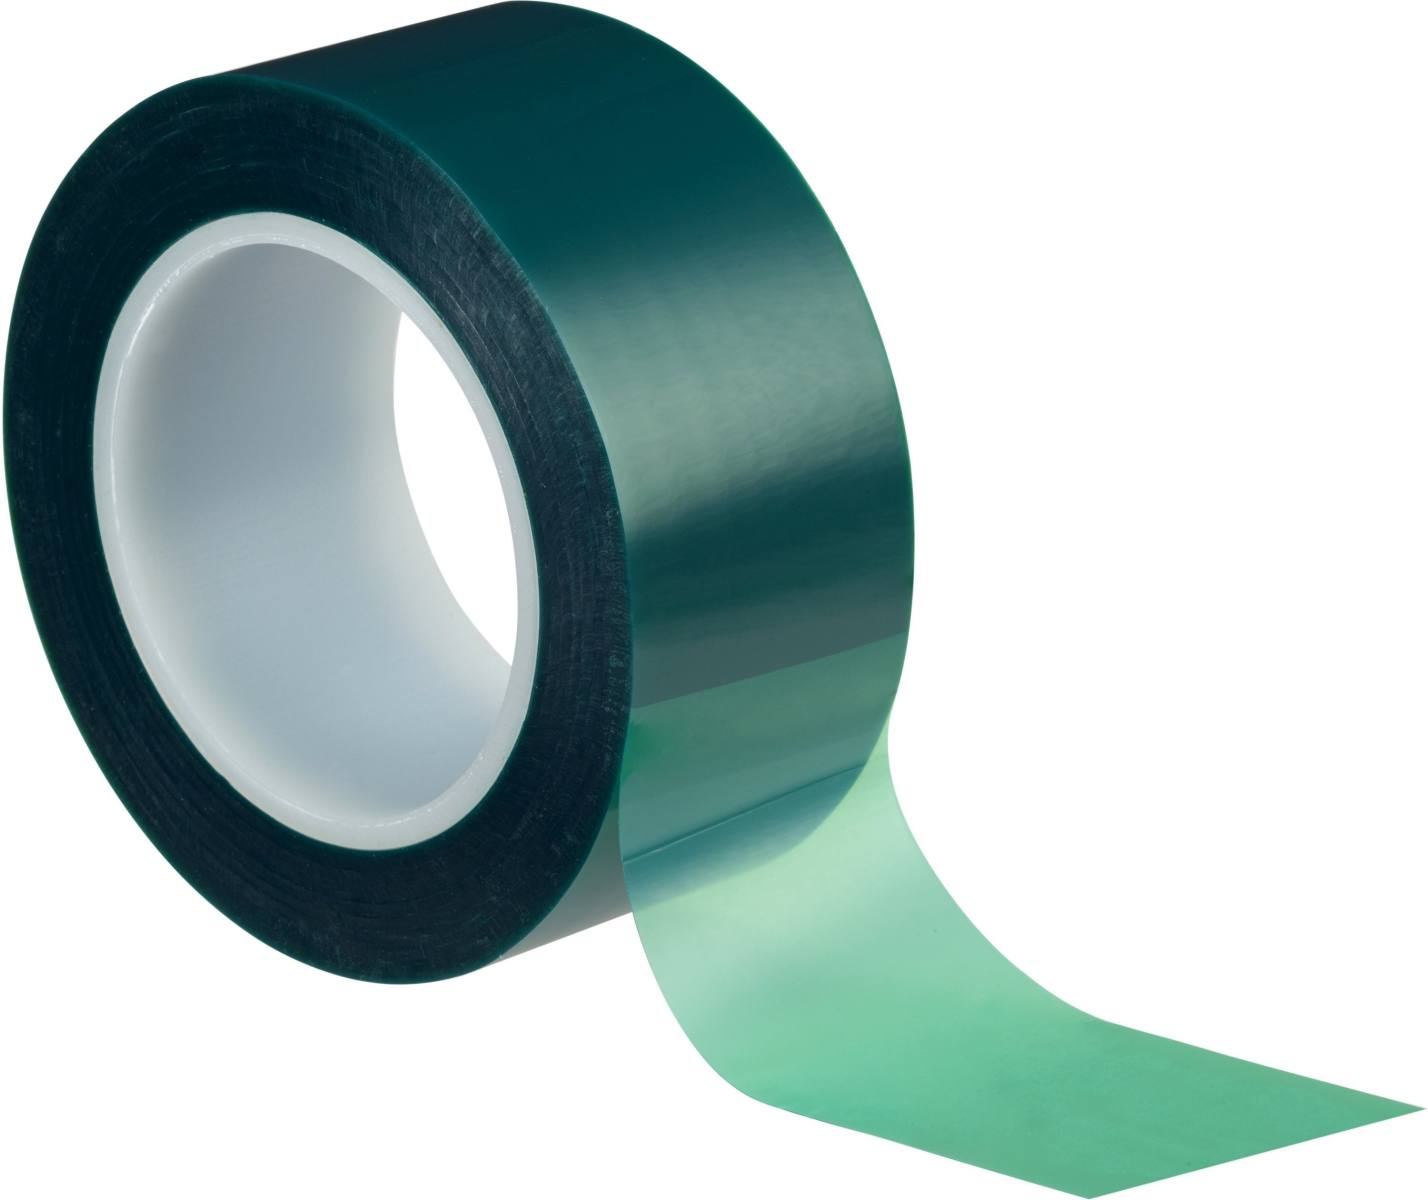 3M polyester masking tape 8992, green, 25 mm x 66 m